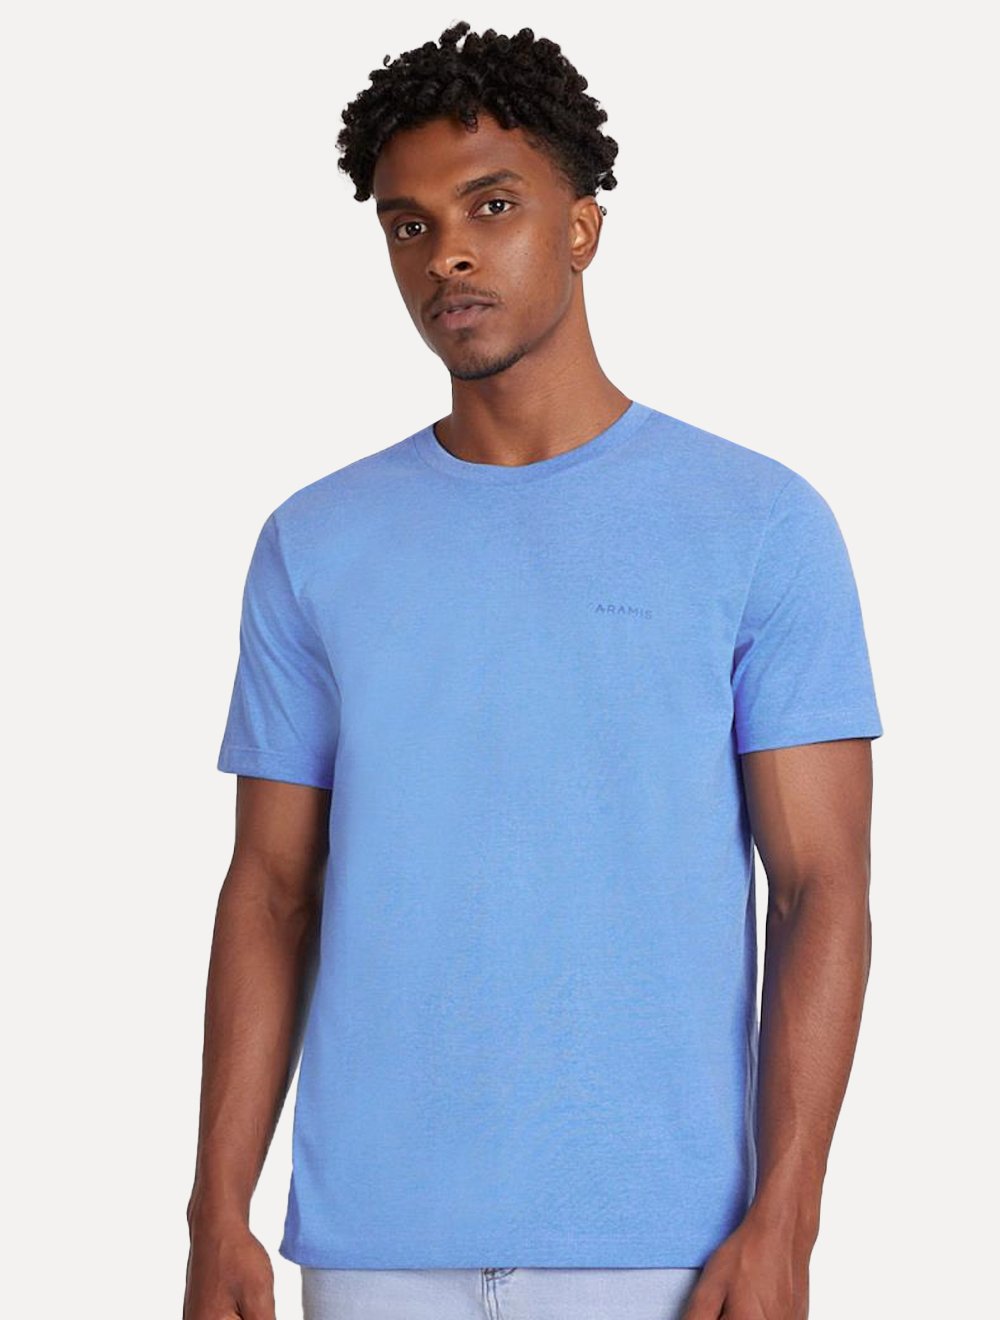 Camiseta Aramis Masculina Eco Lisa Azul Royal Mescla